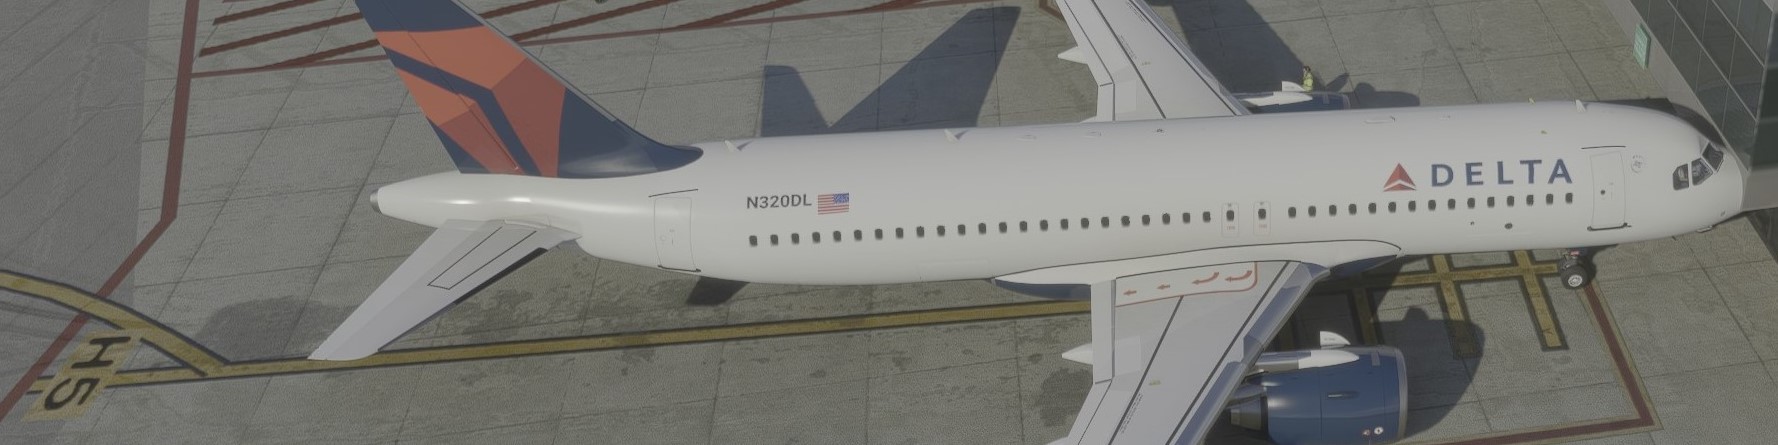 Microsoft Flight Simulator Screenshot 2020.12.18 - 14.47.10.49.jpg